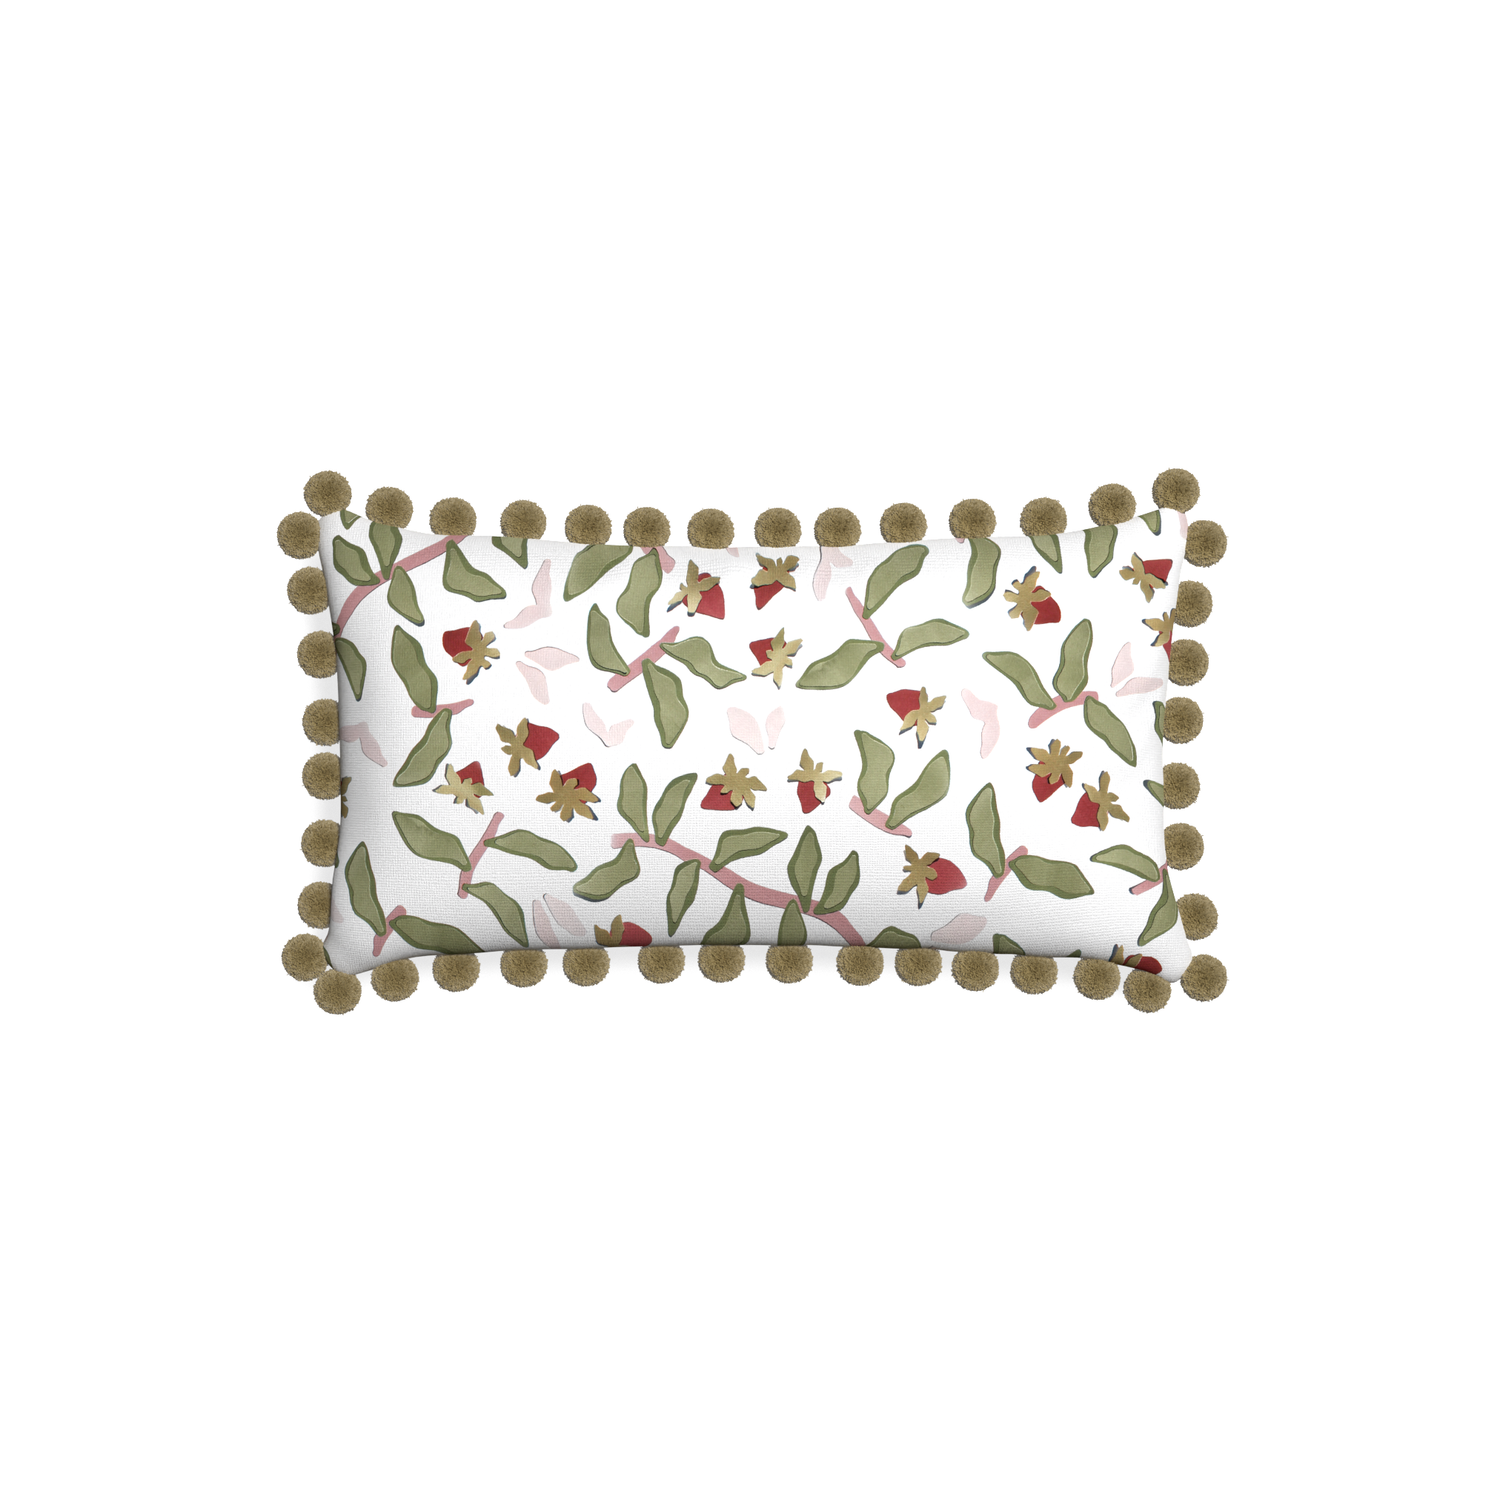 Petite-lumbar nellie custom strawberry & botanicalpillow with olive pom pom on white background